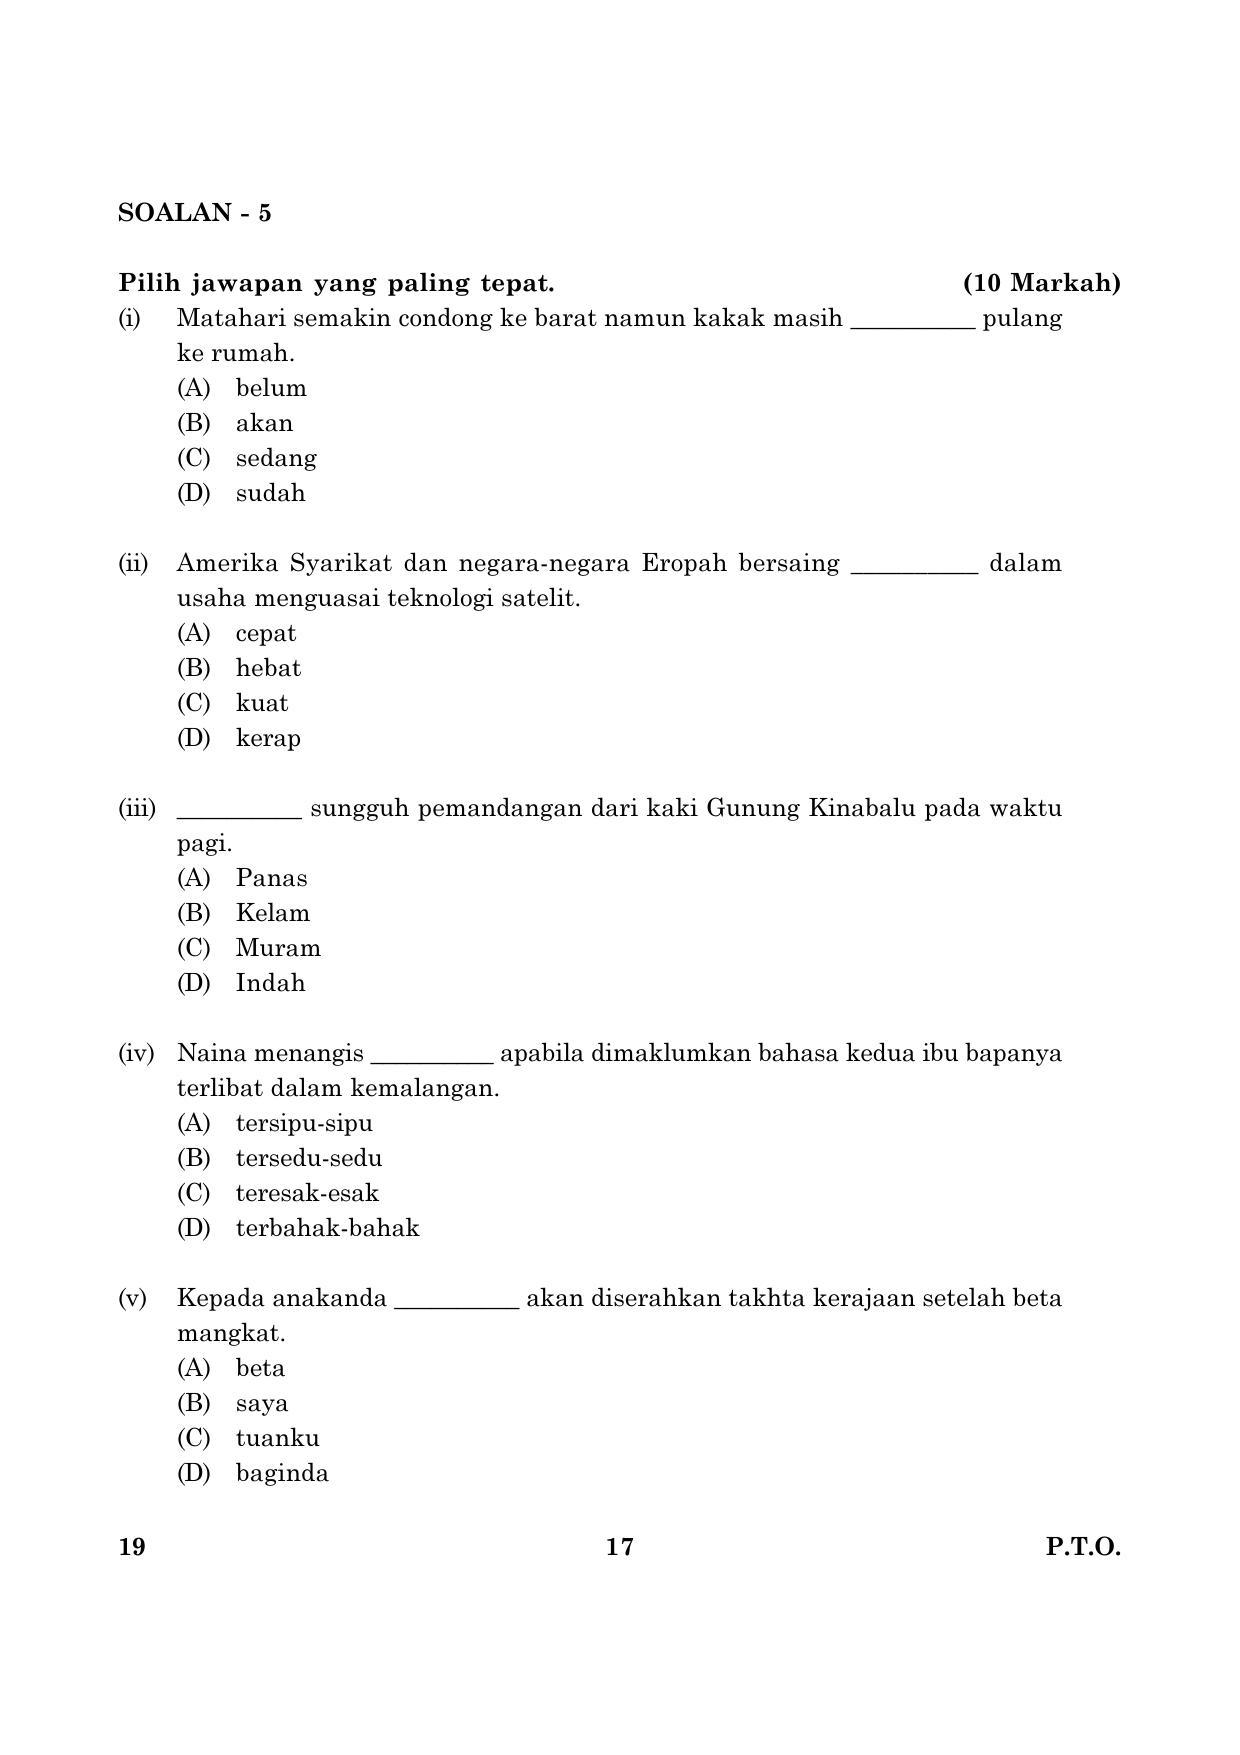 CBSE Class 10 019 Bahasamelayu English 2016 Question Paper - Page 17